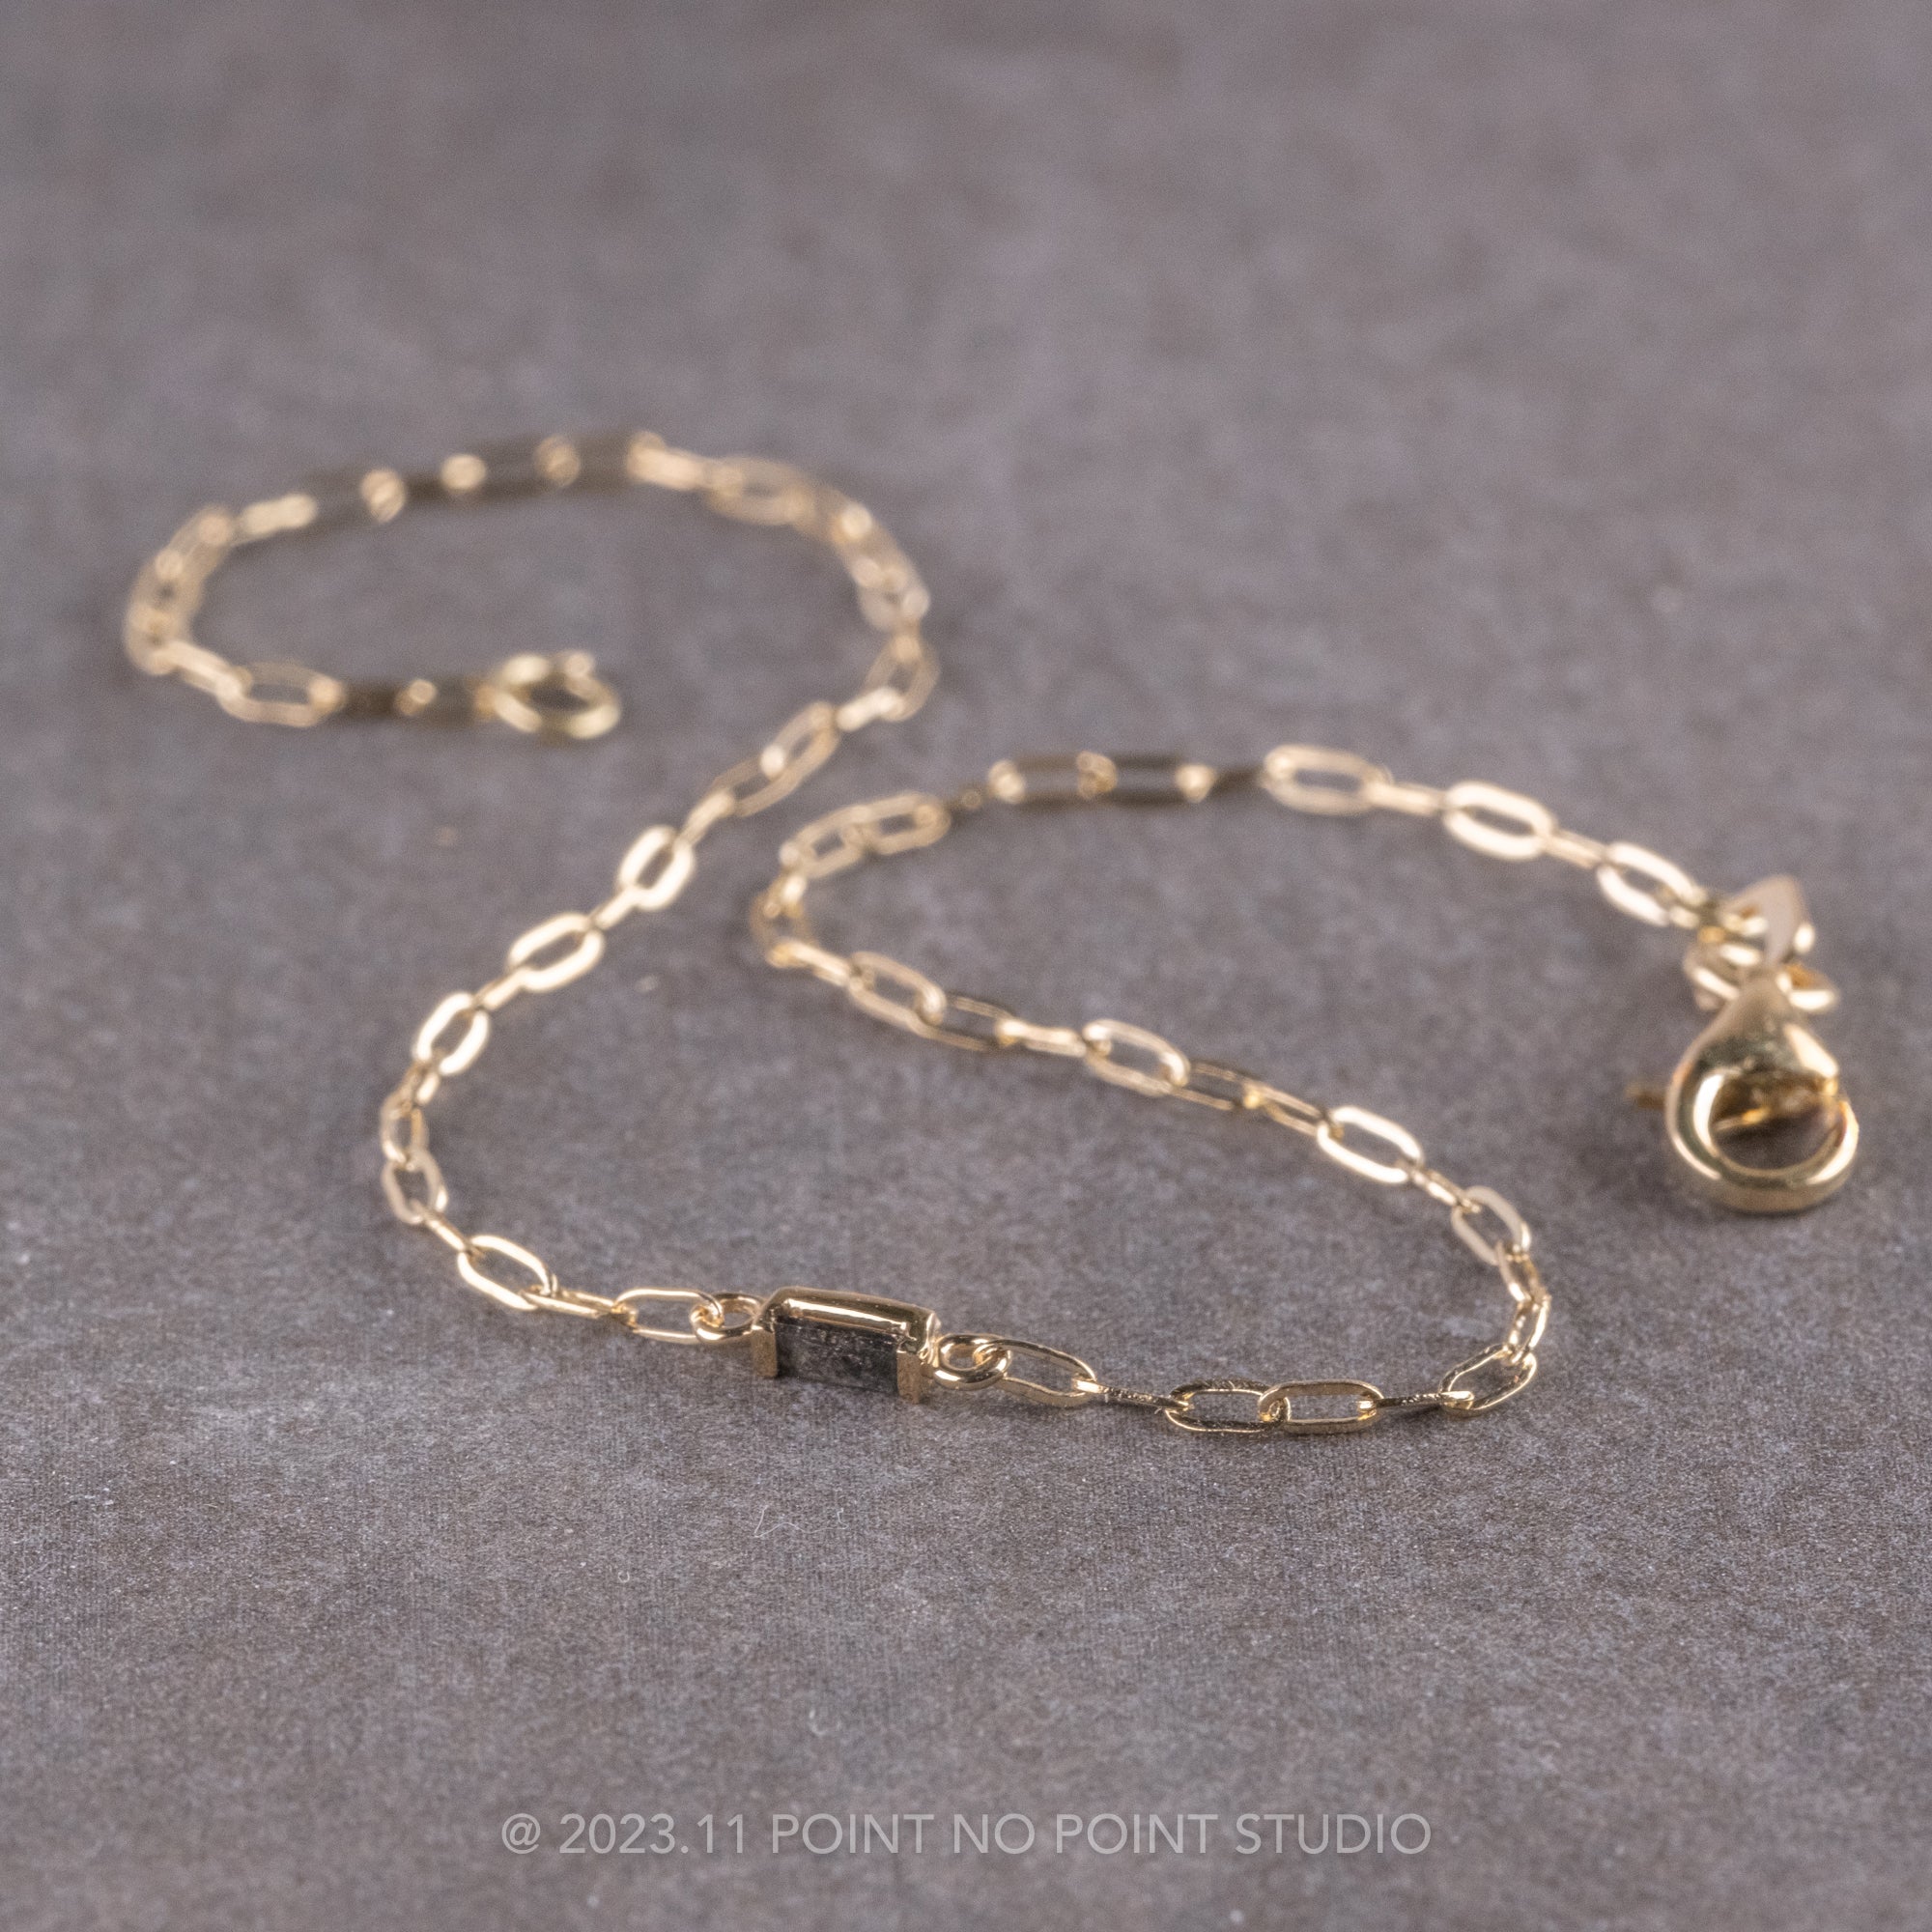 14KT Rose Gold Diamond Flower Bracelet - Bracelets - Shop by Style (ships  in 4-6 weeks) - SHOP